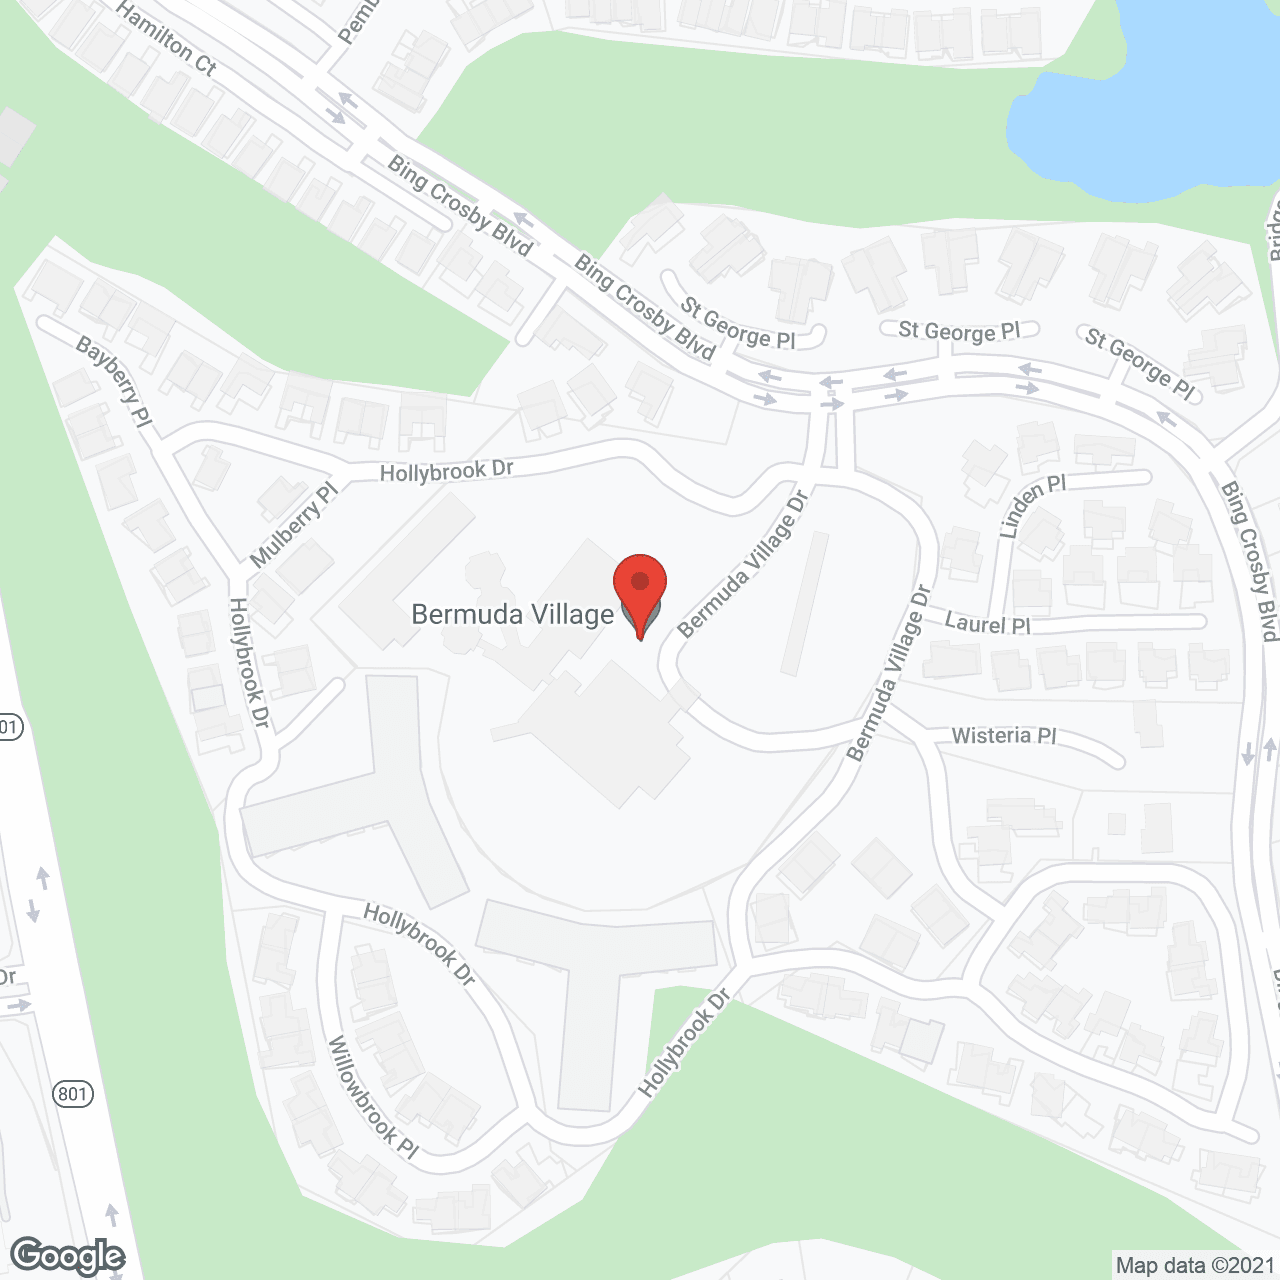 Bermuda Village in google map